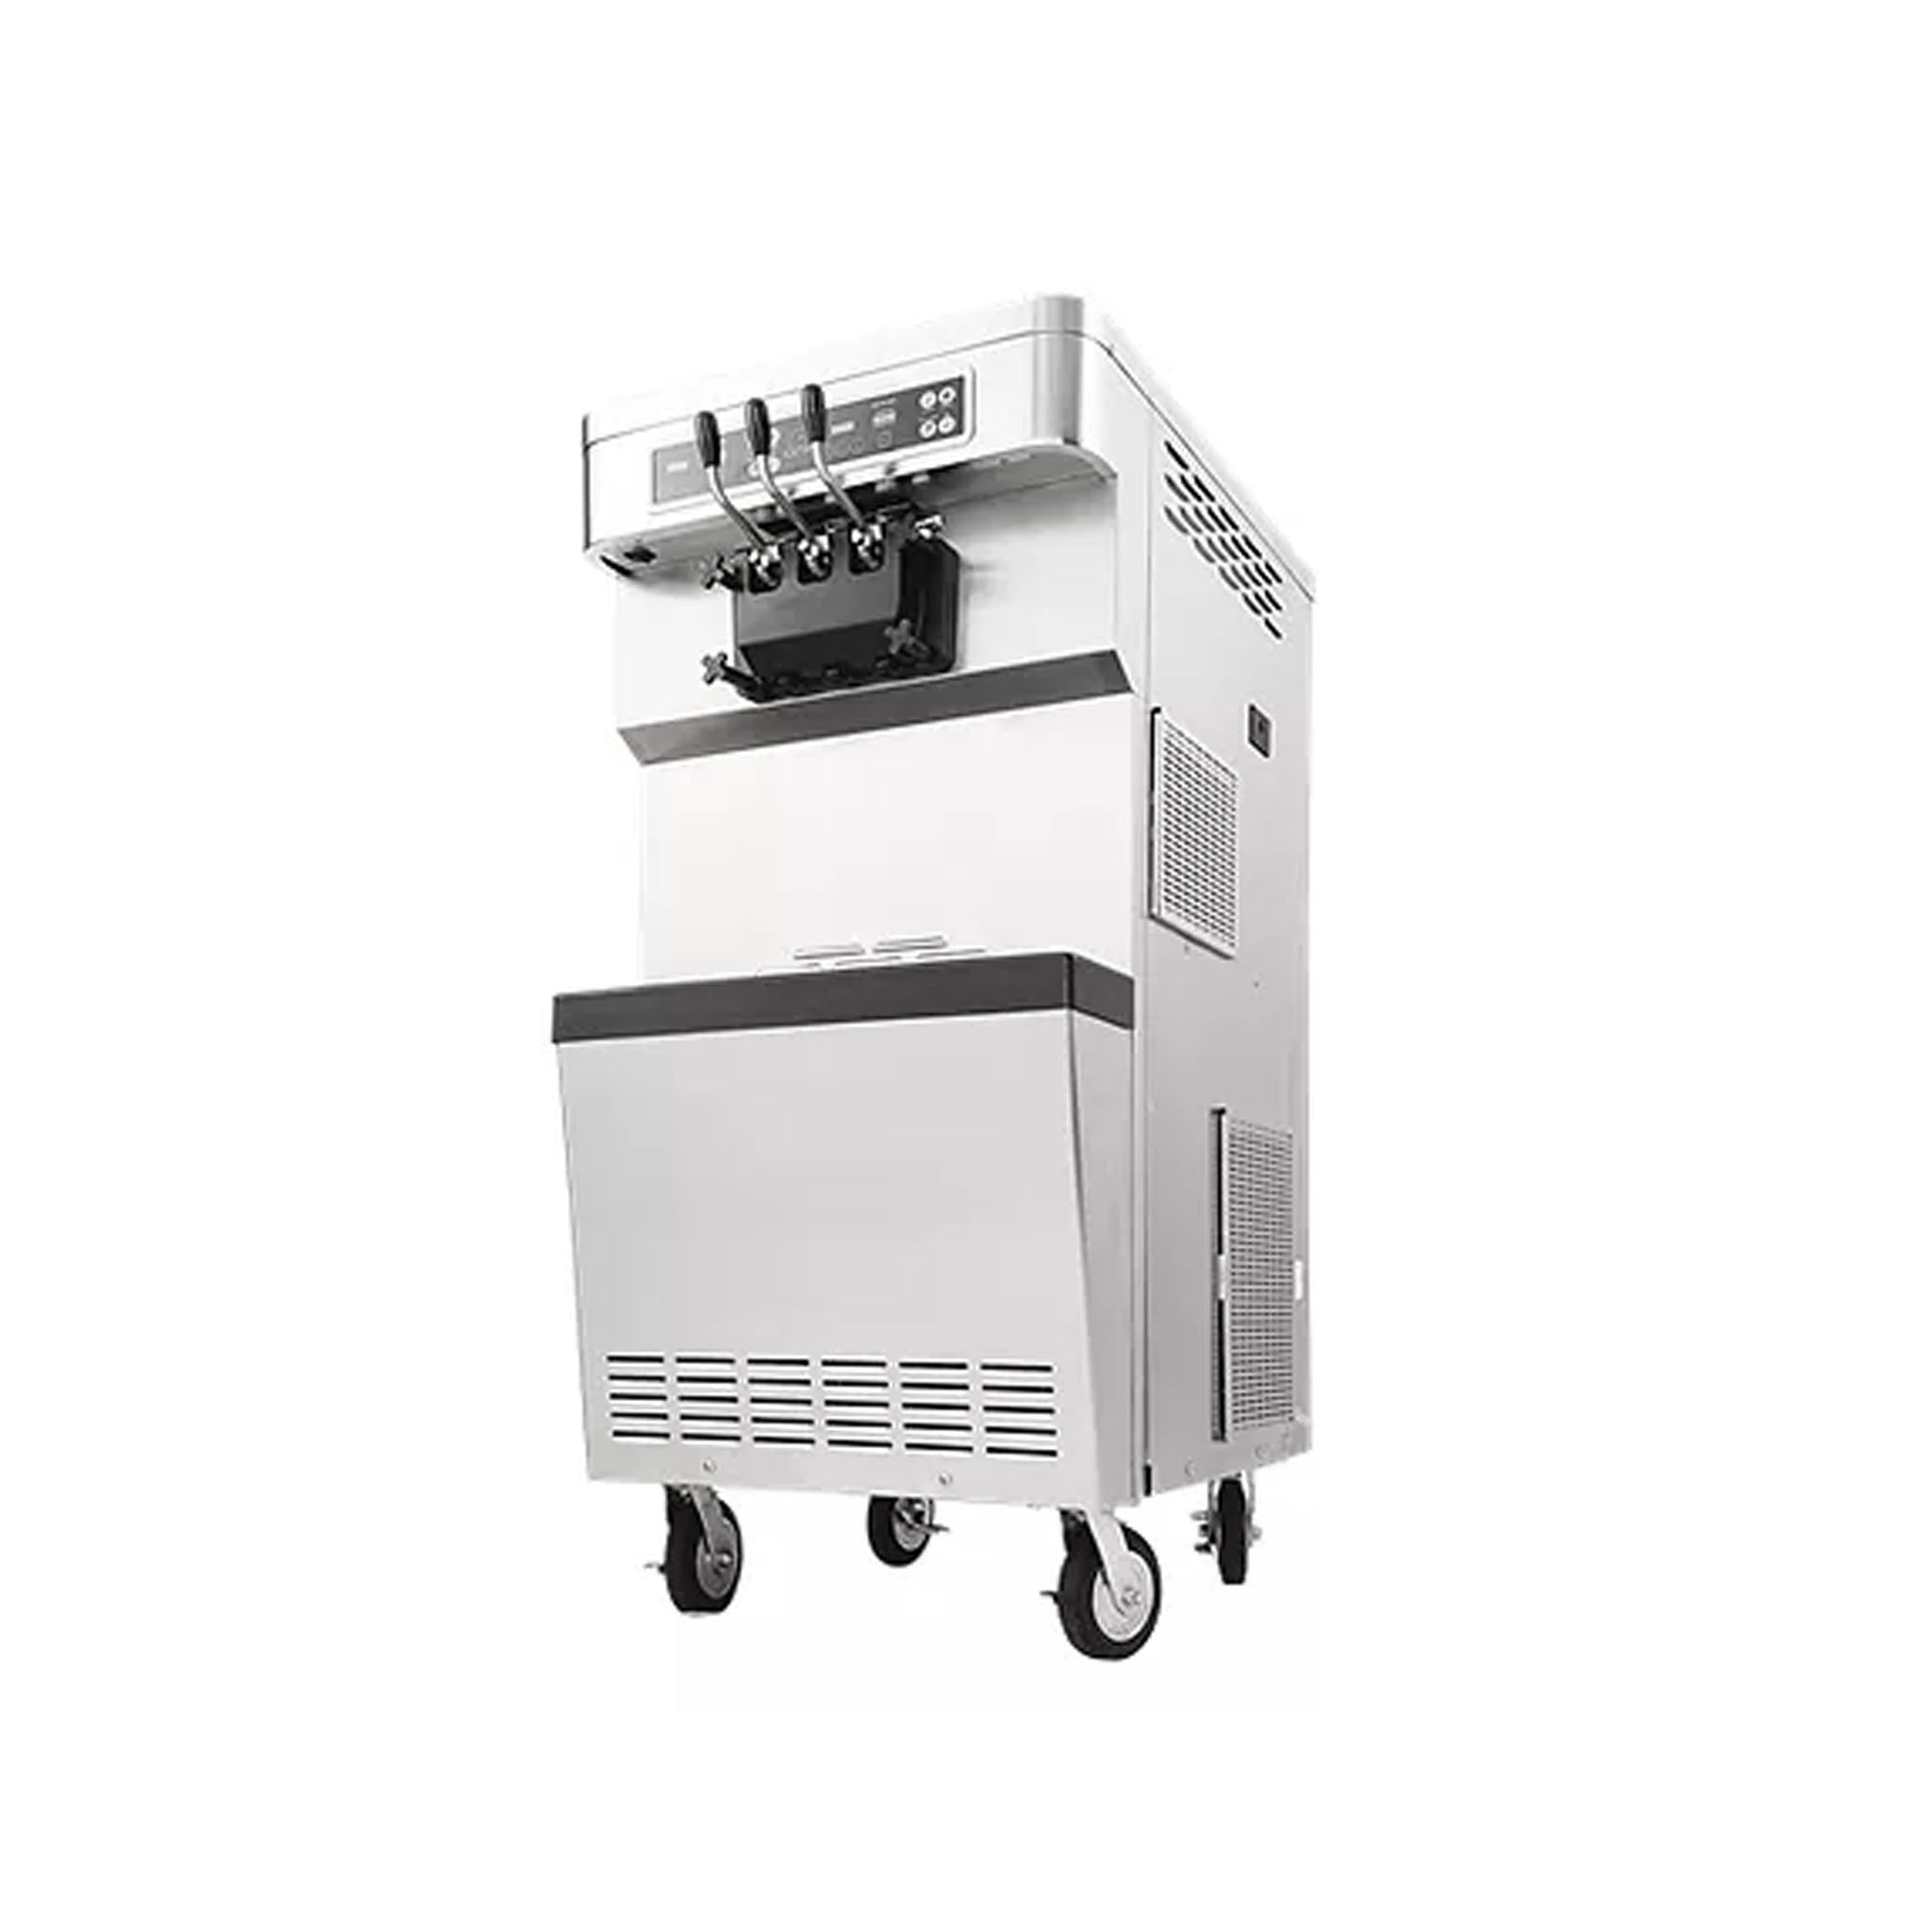 Icetro - ISI-300TA, Commercial Soft Serve Countertop Ice Cream Machine